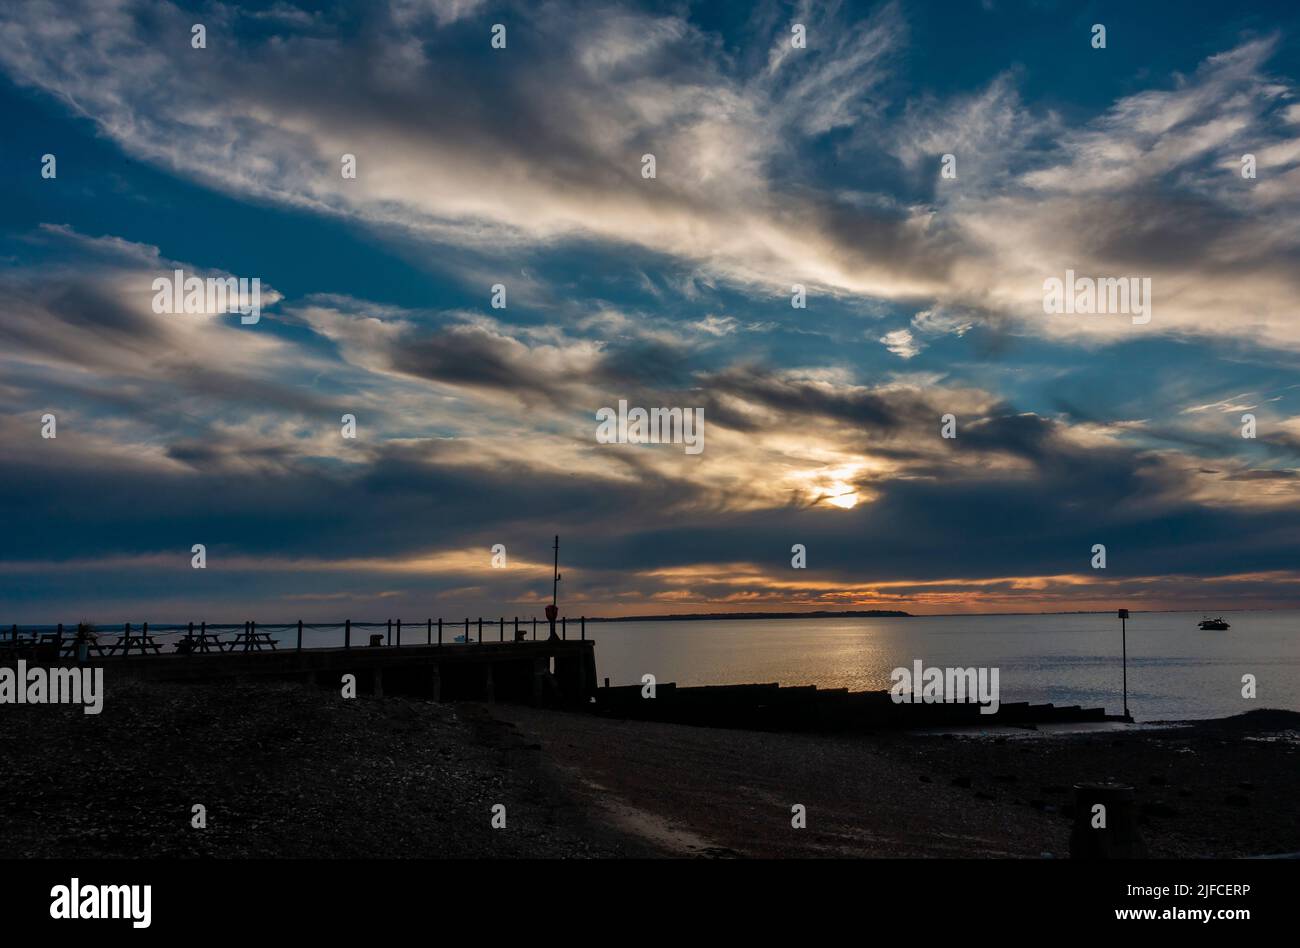 Whitstable Sunset, Whitstable Beach, verano, noche, con vistas a la isla de Sheppey. Foto de stock